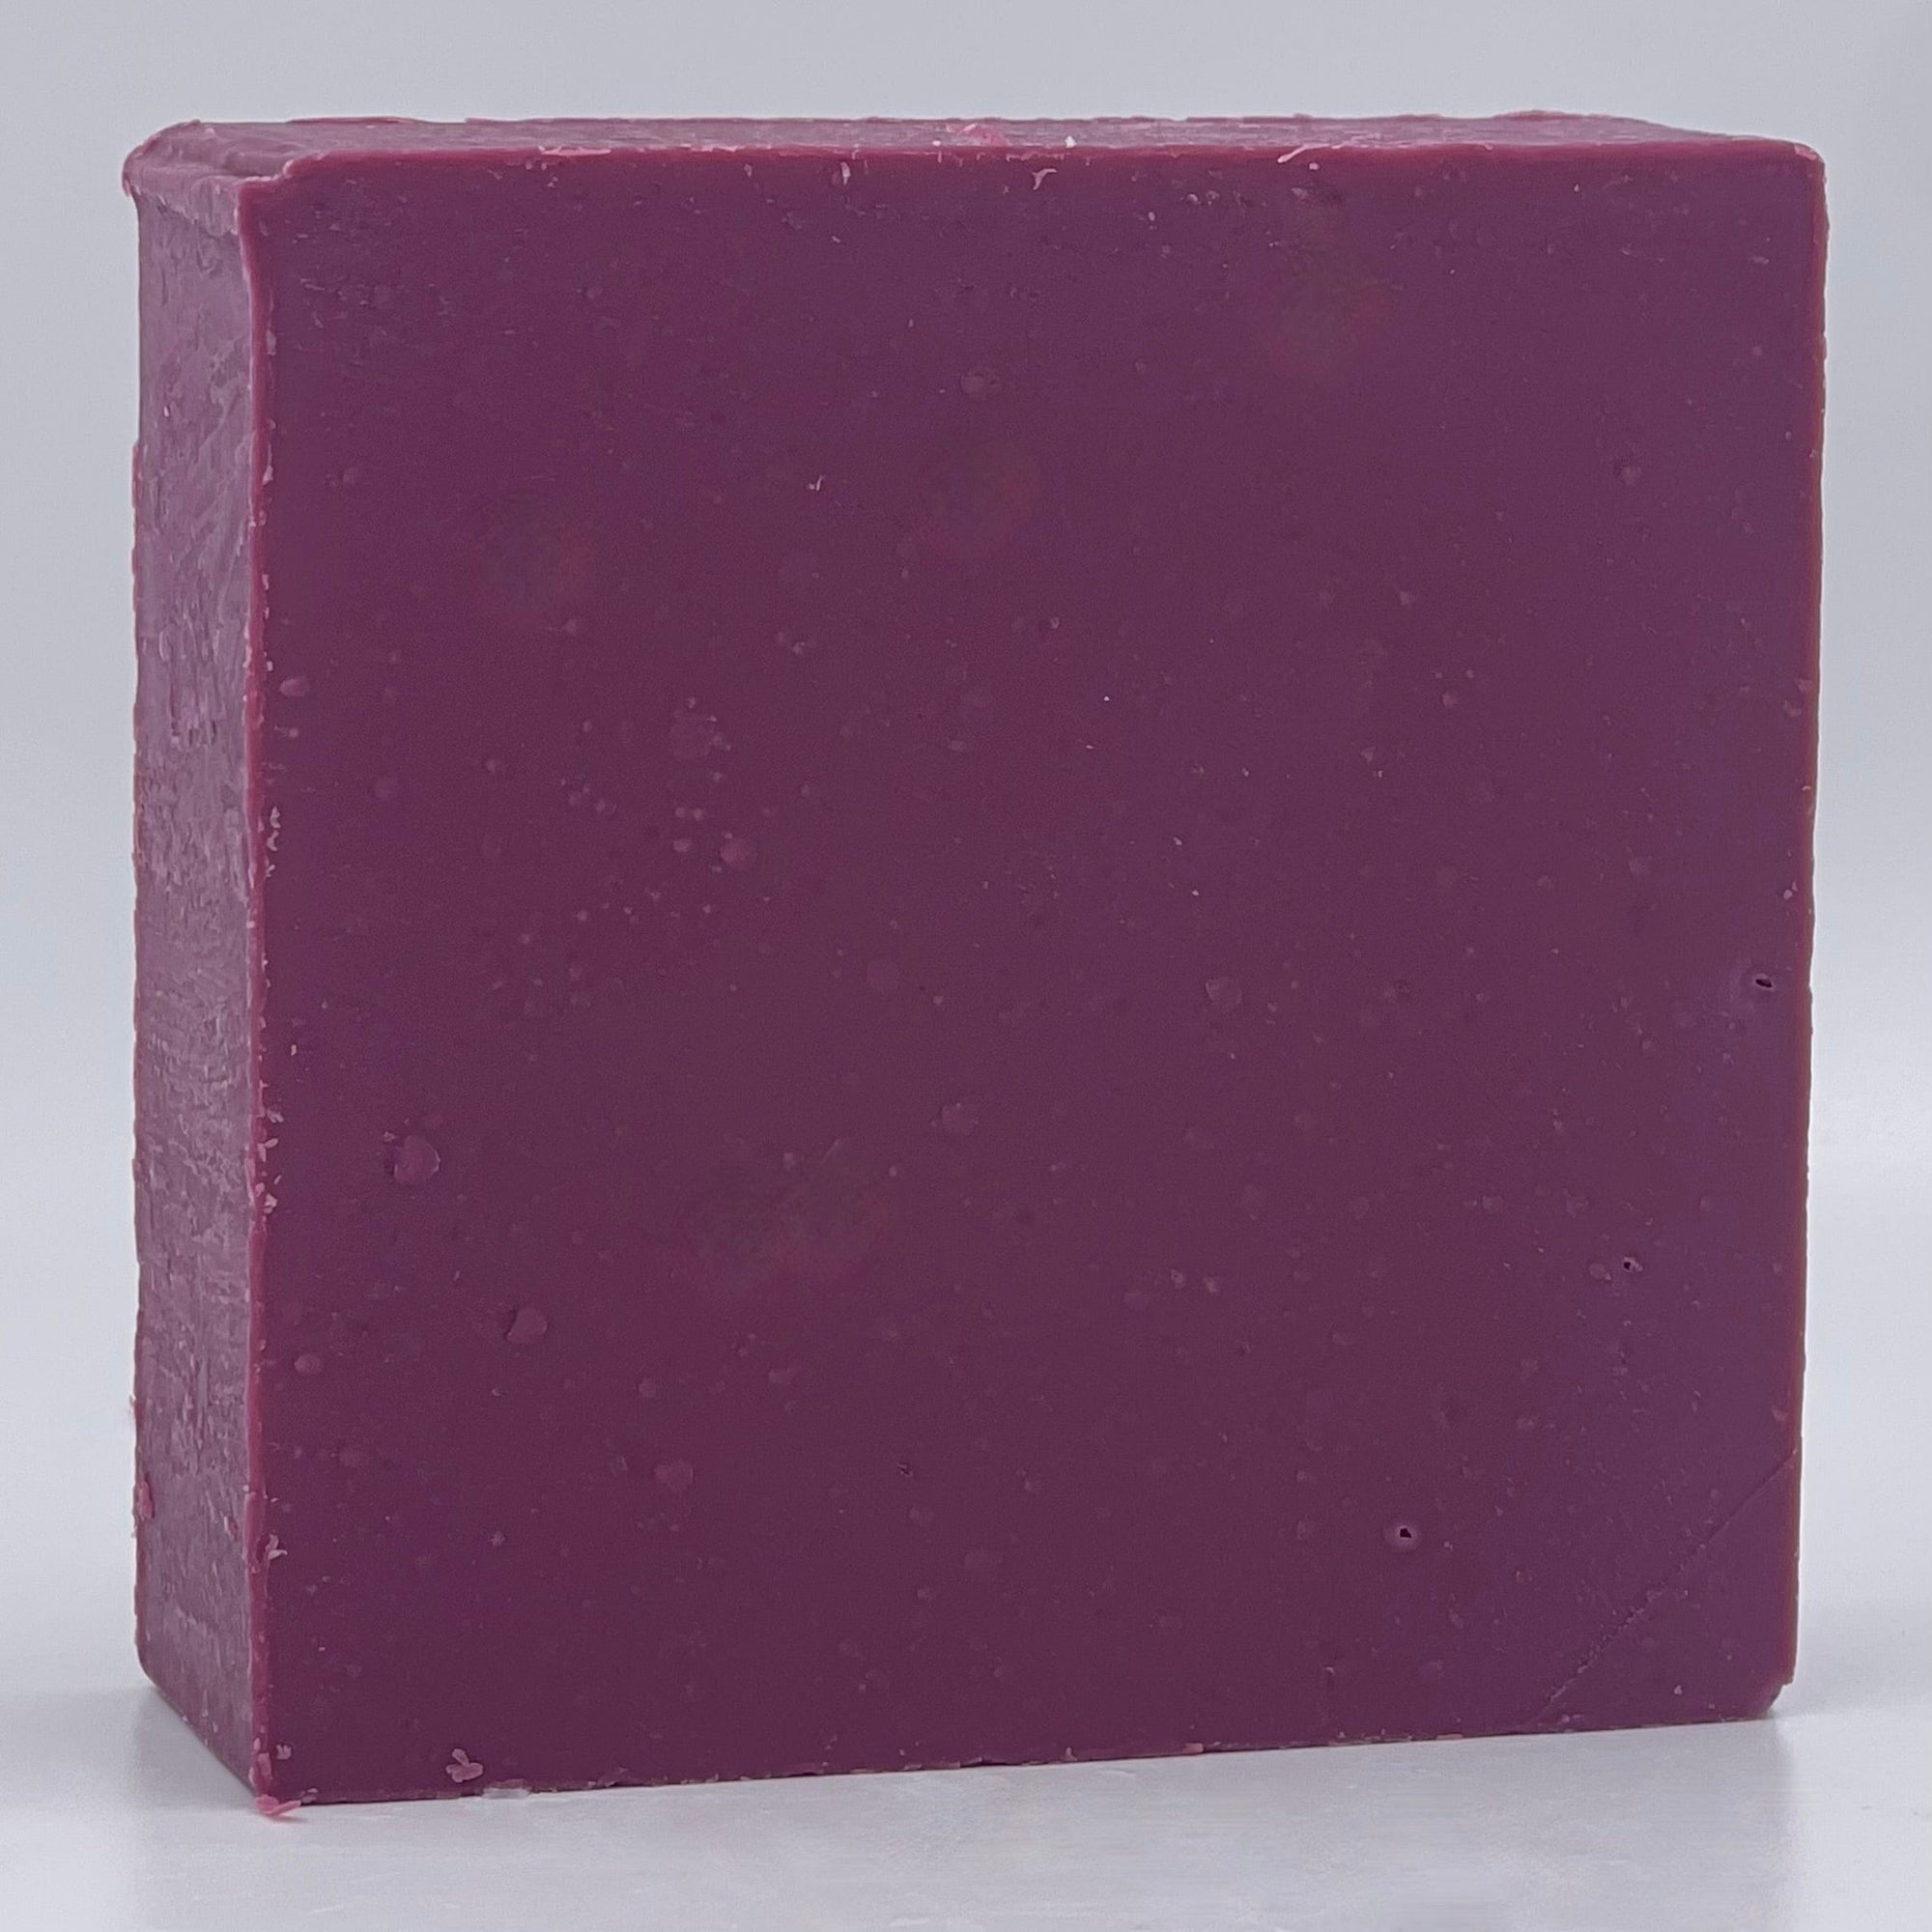 Silk Jasmine Soap